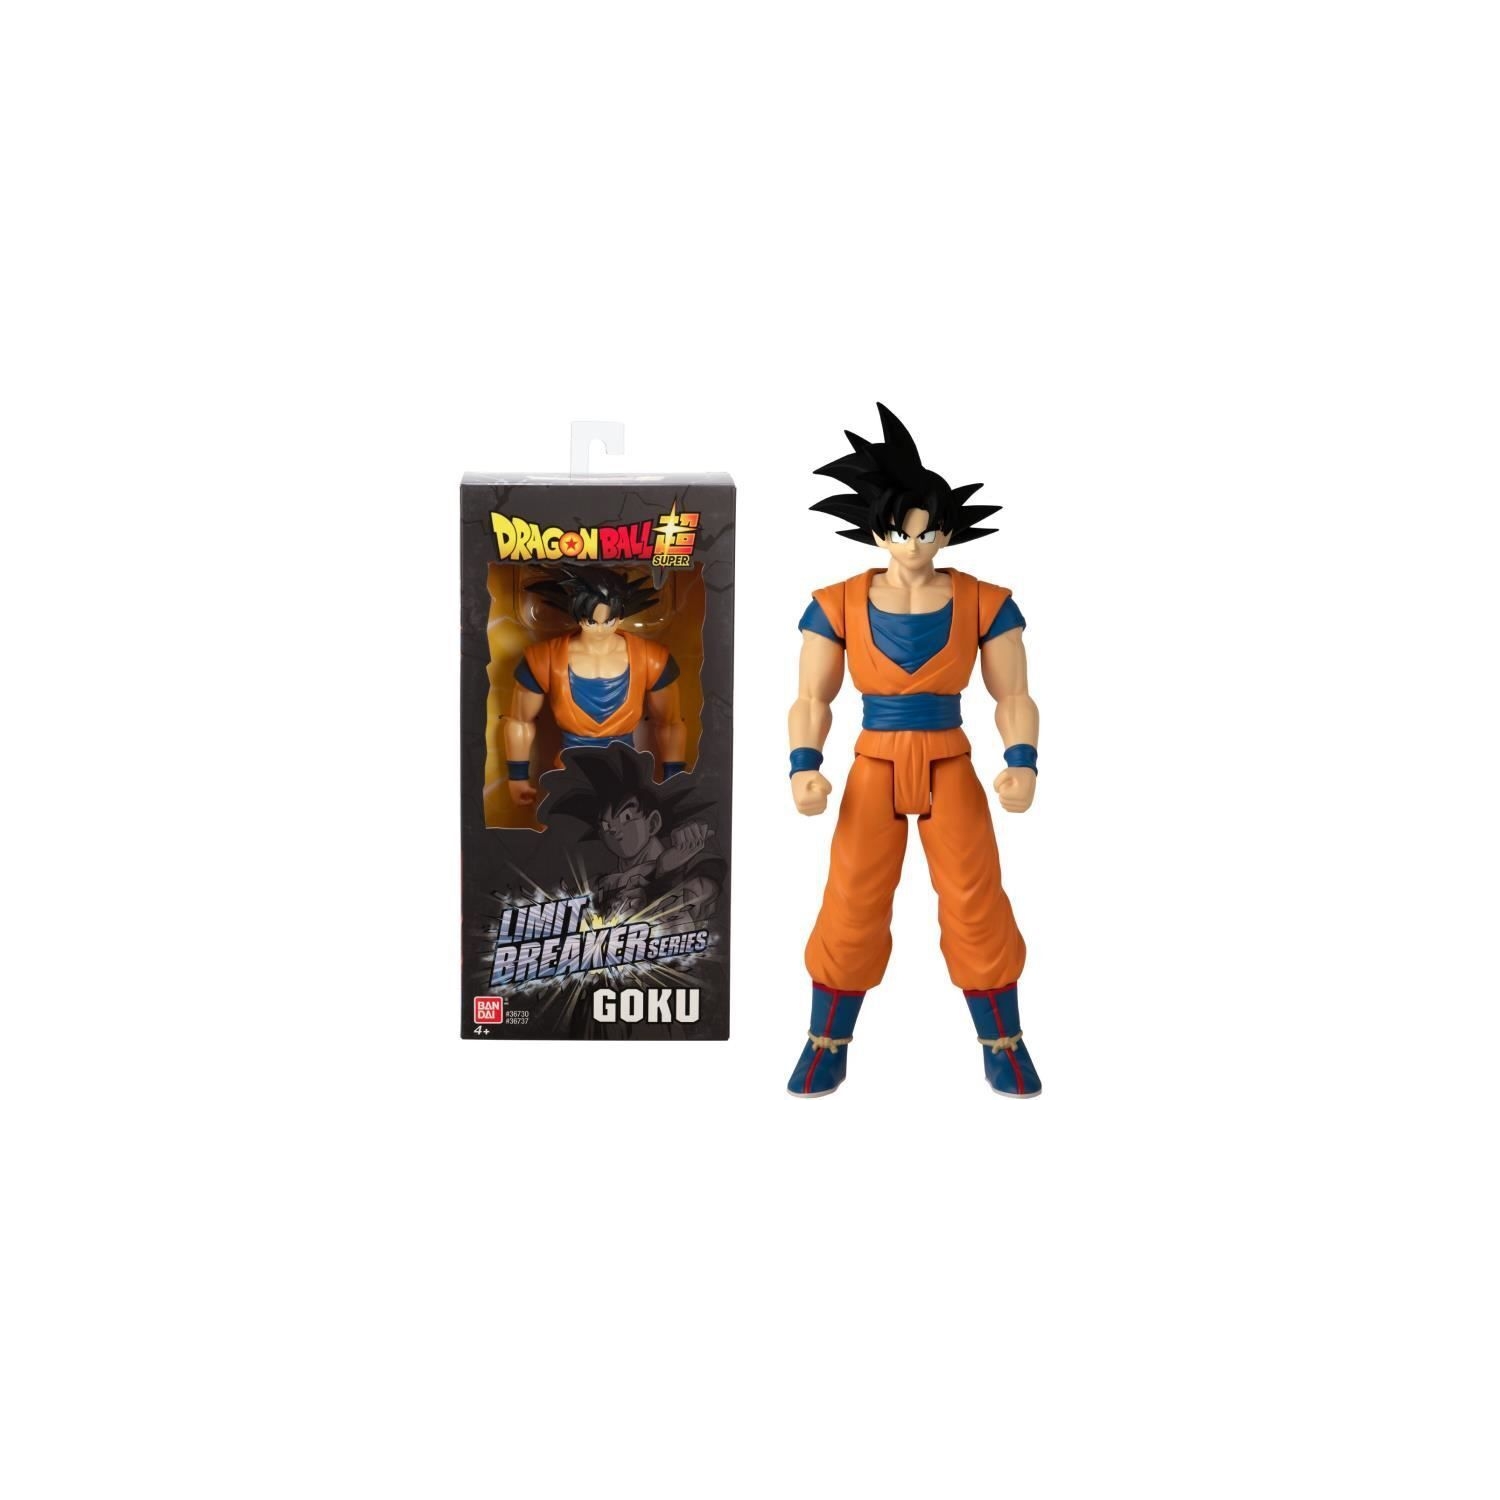 DRAGON BALL - Goku - Figurine géante Limit Breaker 30cm